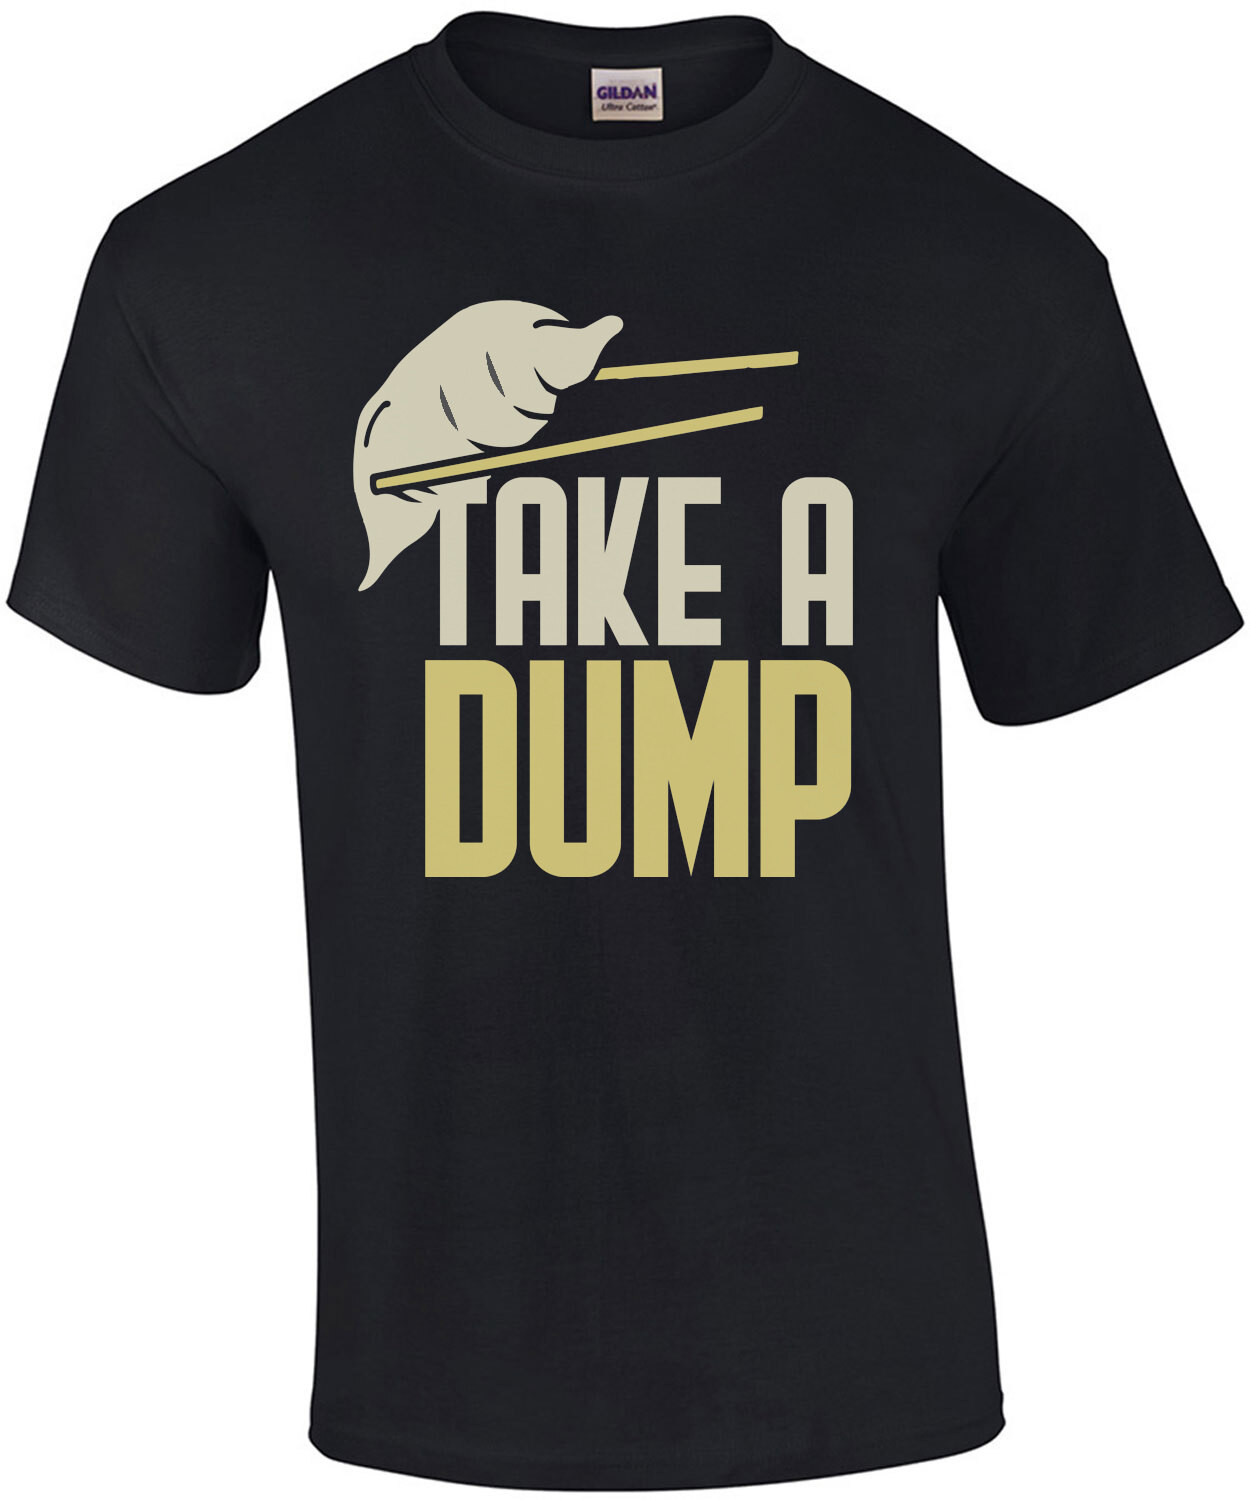 Take a dump - funny dumpling food t-shirt